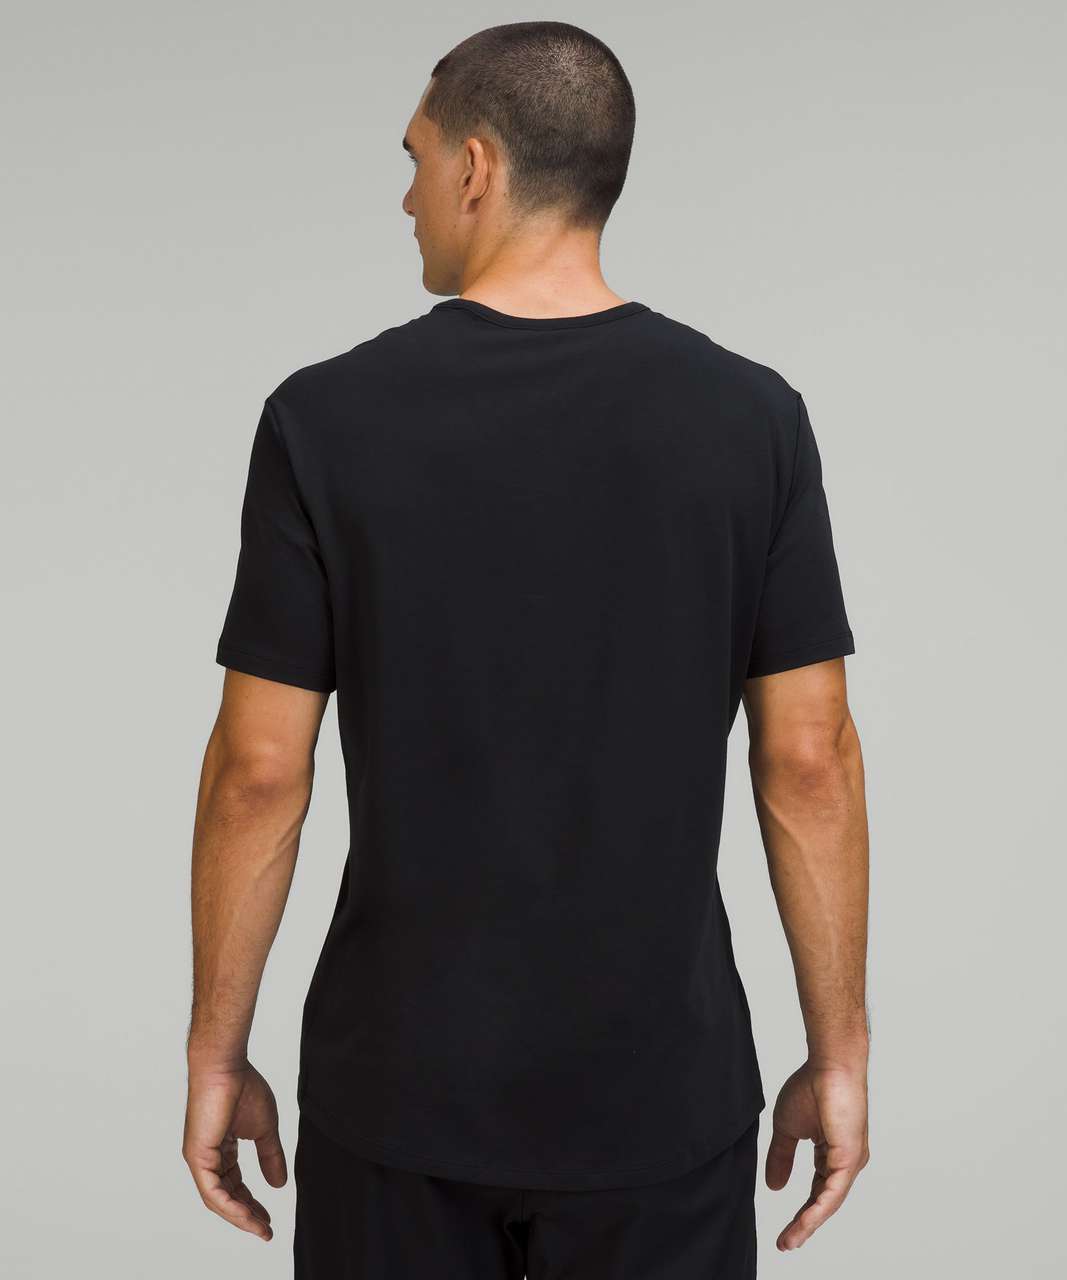 Lululemon 5 Year Basic T-Shirt *San Francisco - Black